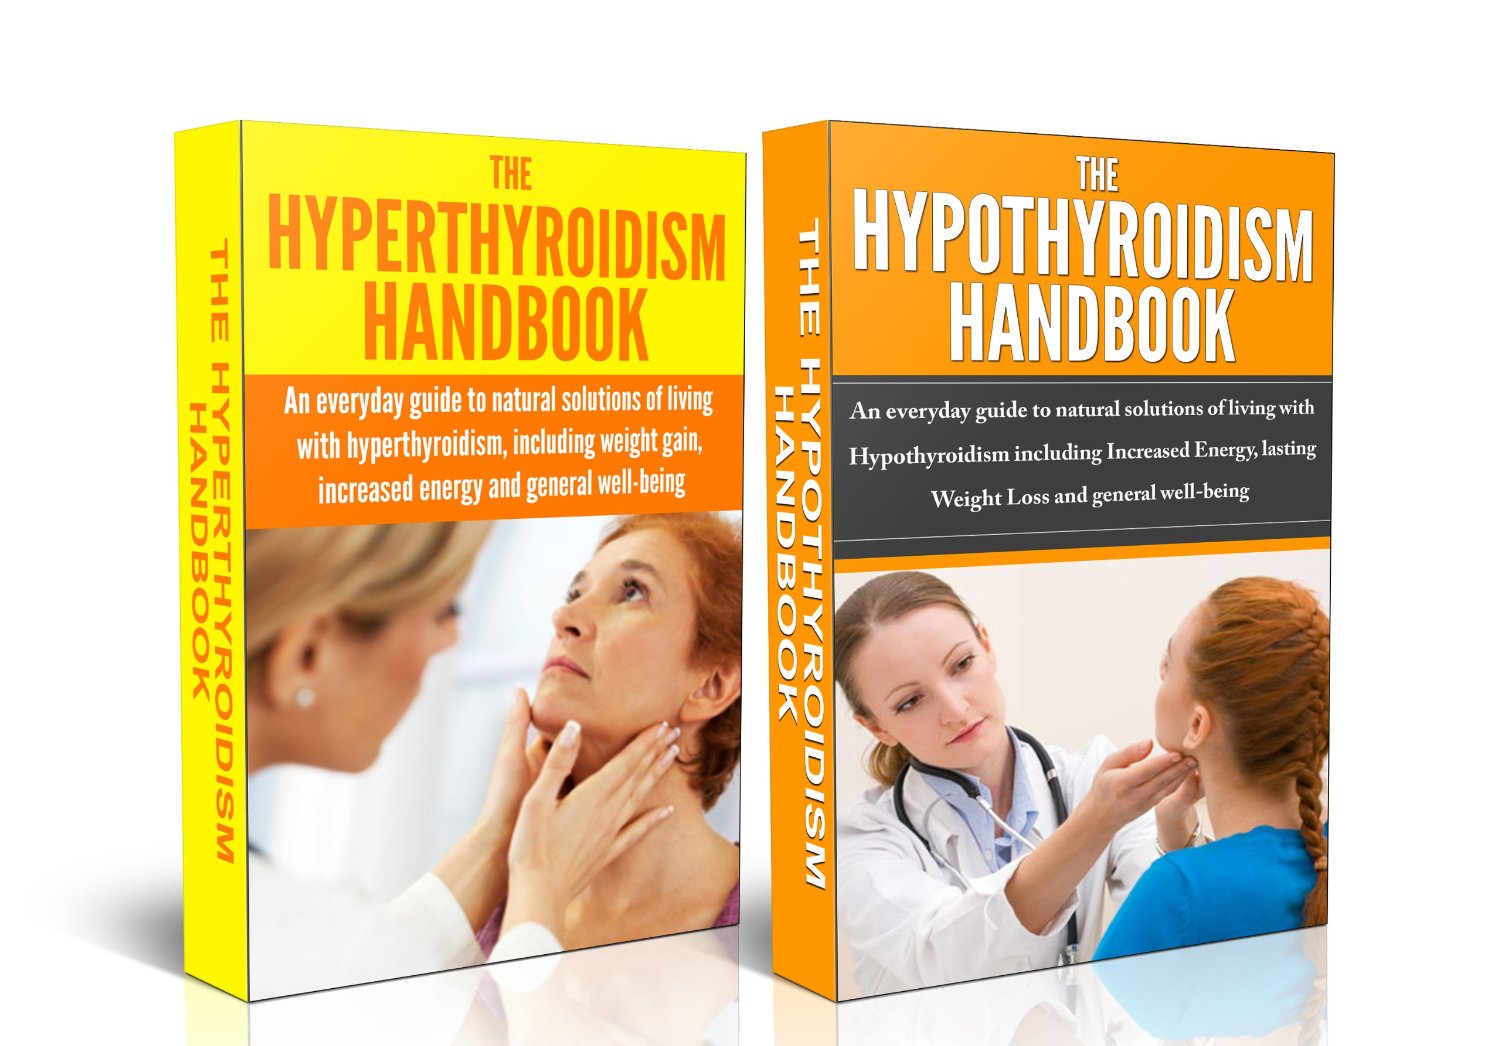 HYPOTHYROIDISM BOX SET #10 by Lindsey P